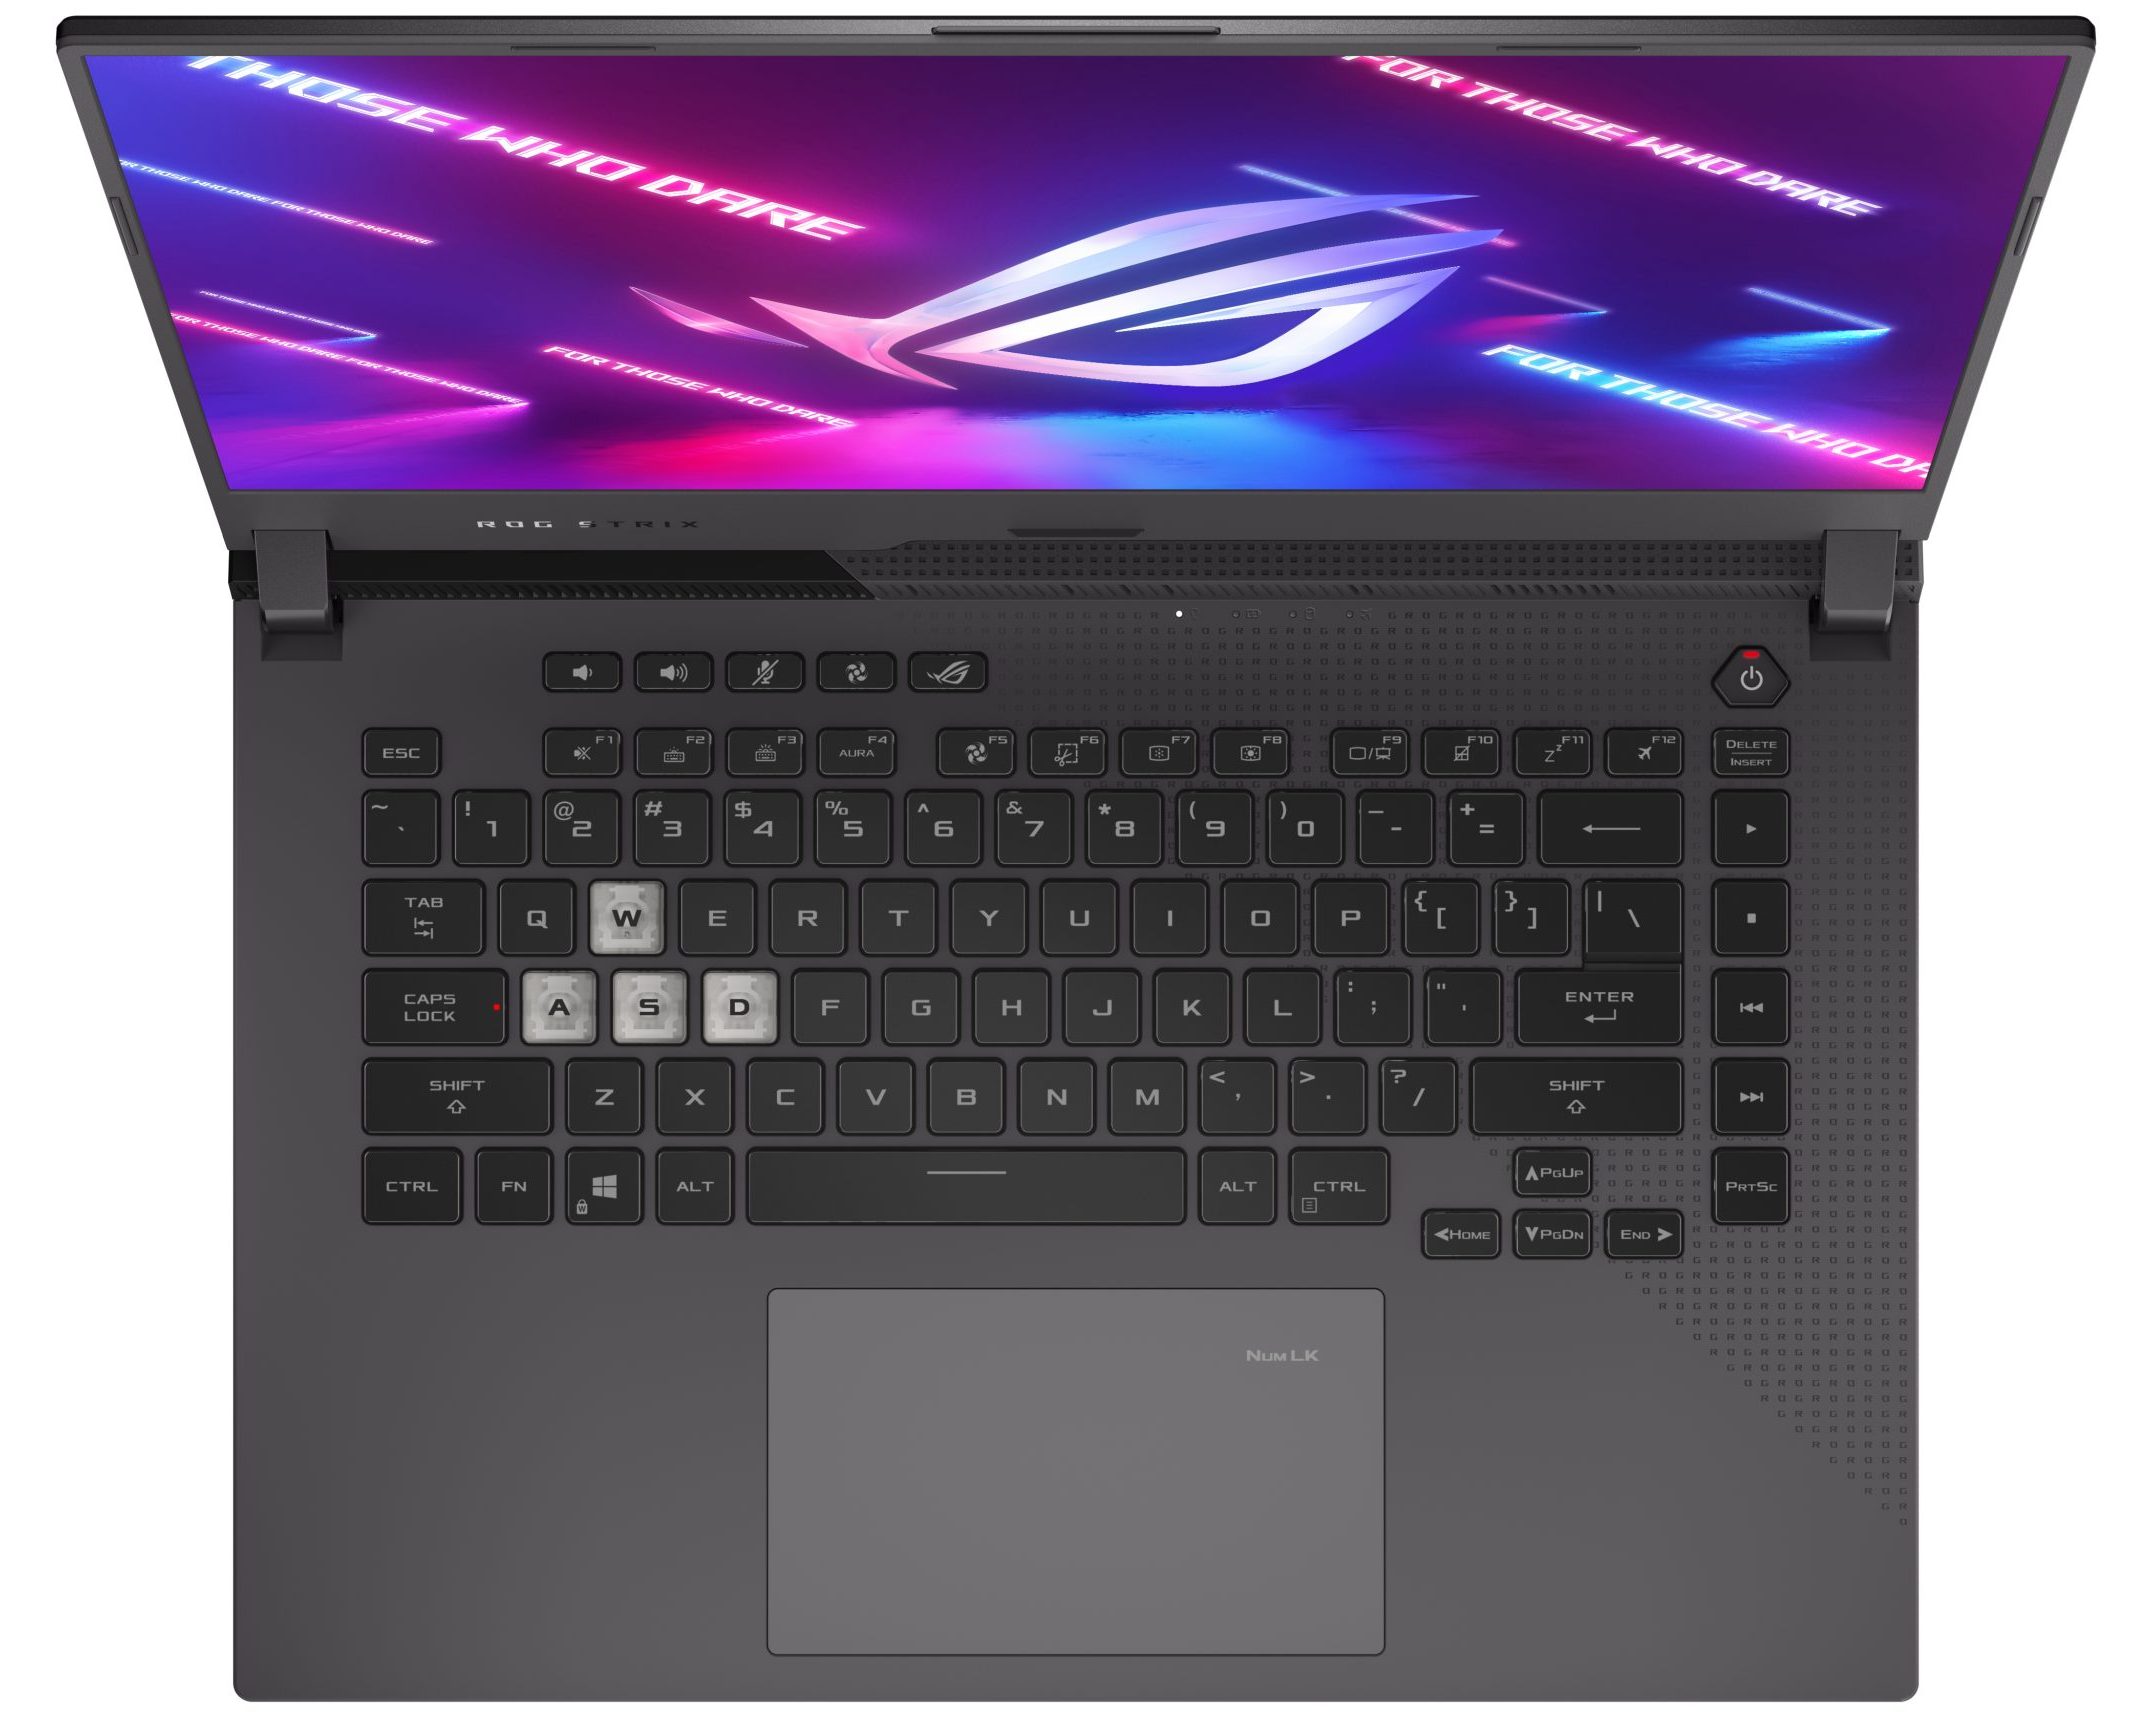  ASUS ROG Strix G15 (2021) Advantage Edition Gaming Laptop,  15.6 300Hz FHD Display, Radeon RX 6800M GPU, AMD Ryzen 9-5900HX, RGB  Keyboard, Windows 10, 16GB RAM ?512GB PCIe SSD : Electronics